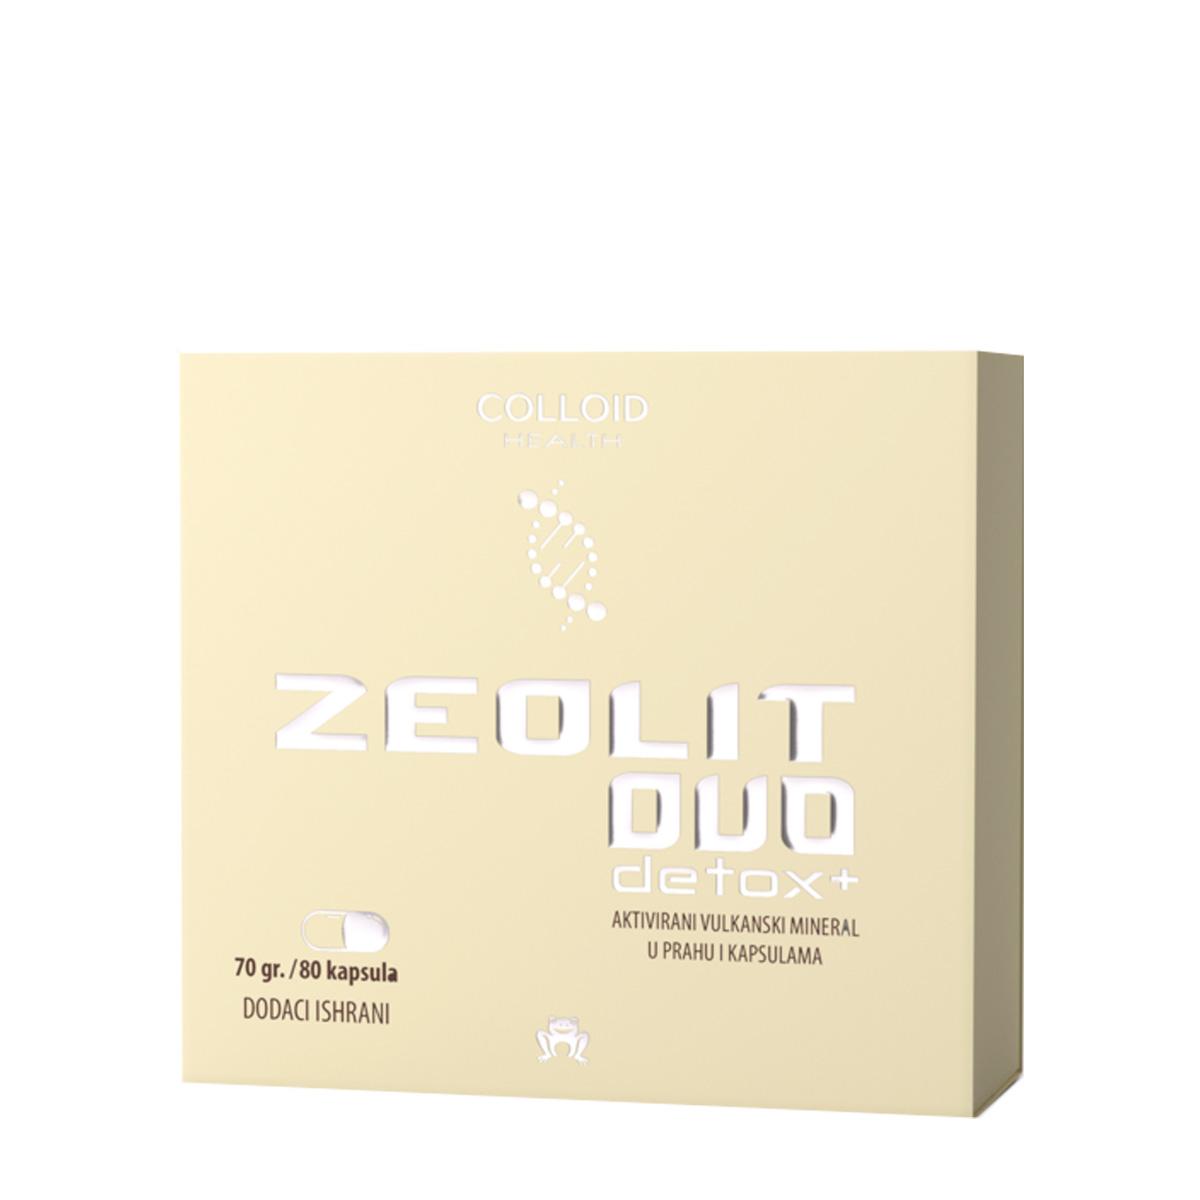 Selected image for KOLOID Zeolit duo detox 70 g 80/1